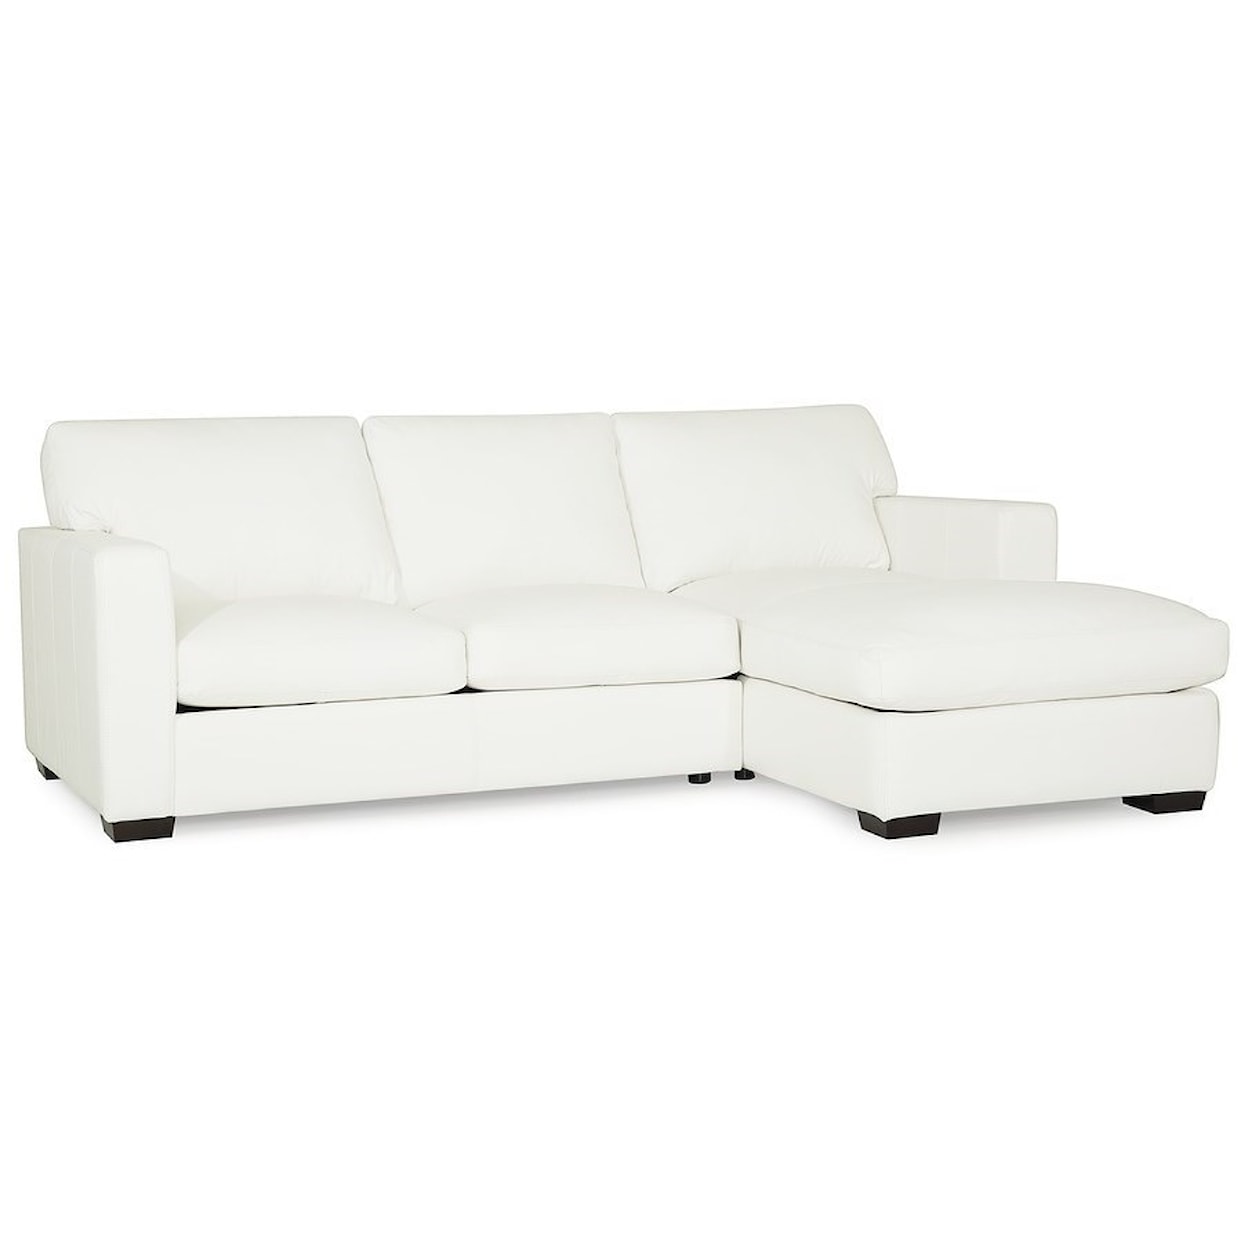 Palliser Colebrook Sectional Sofa